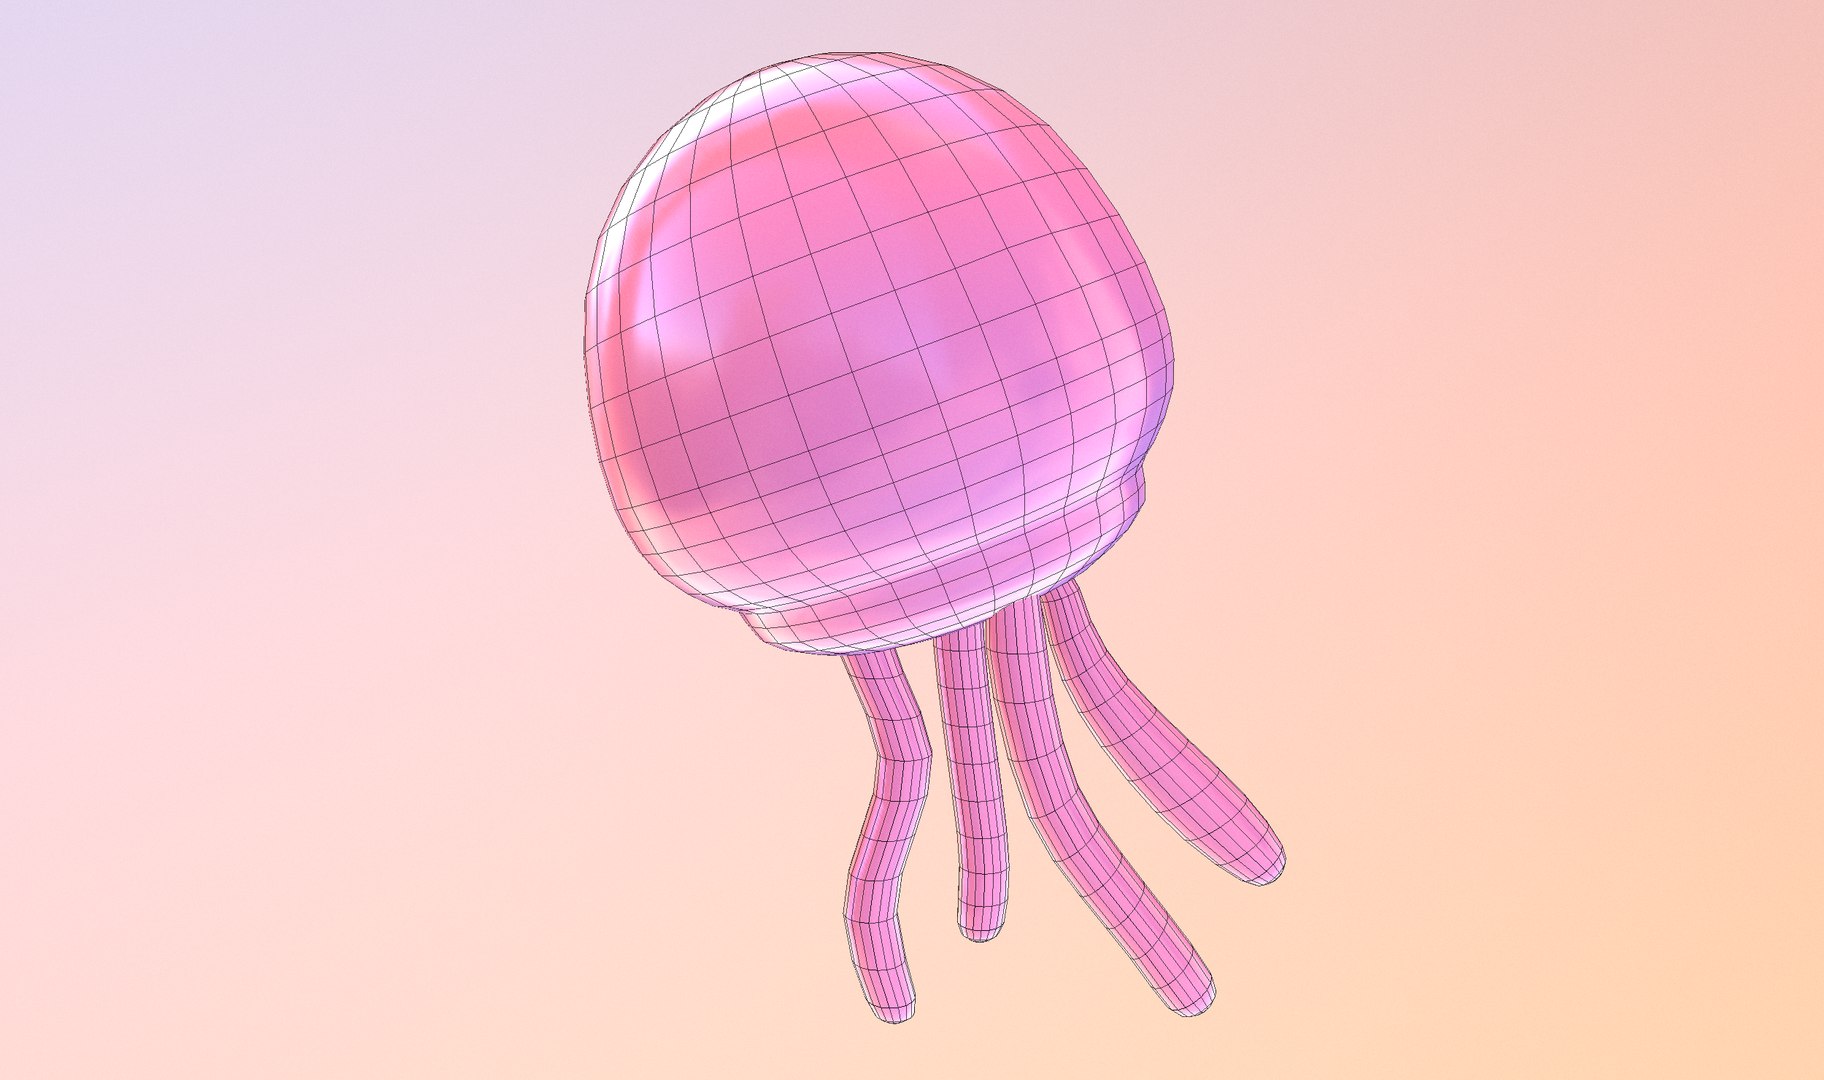 spongebob jellyfish png